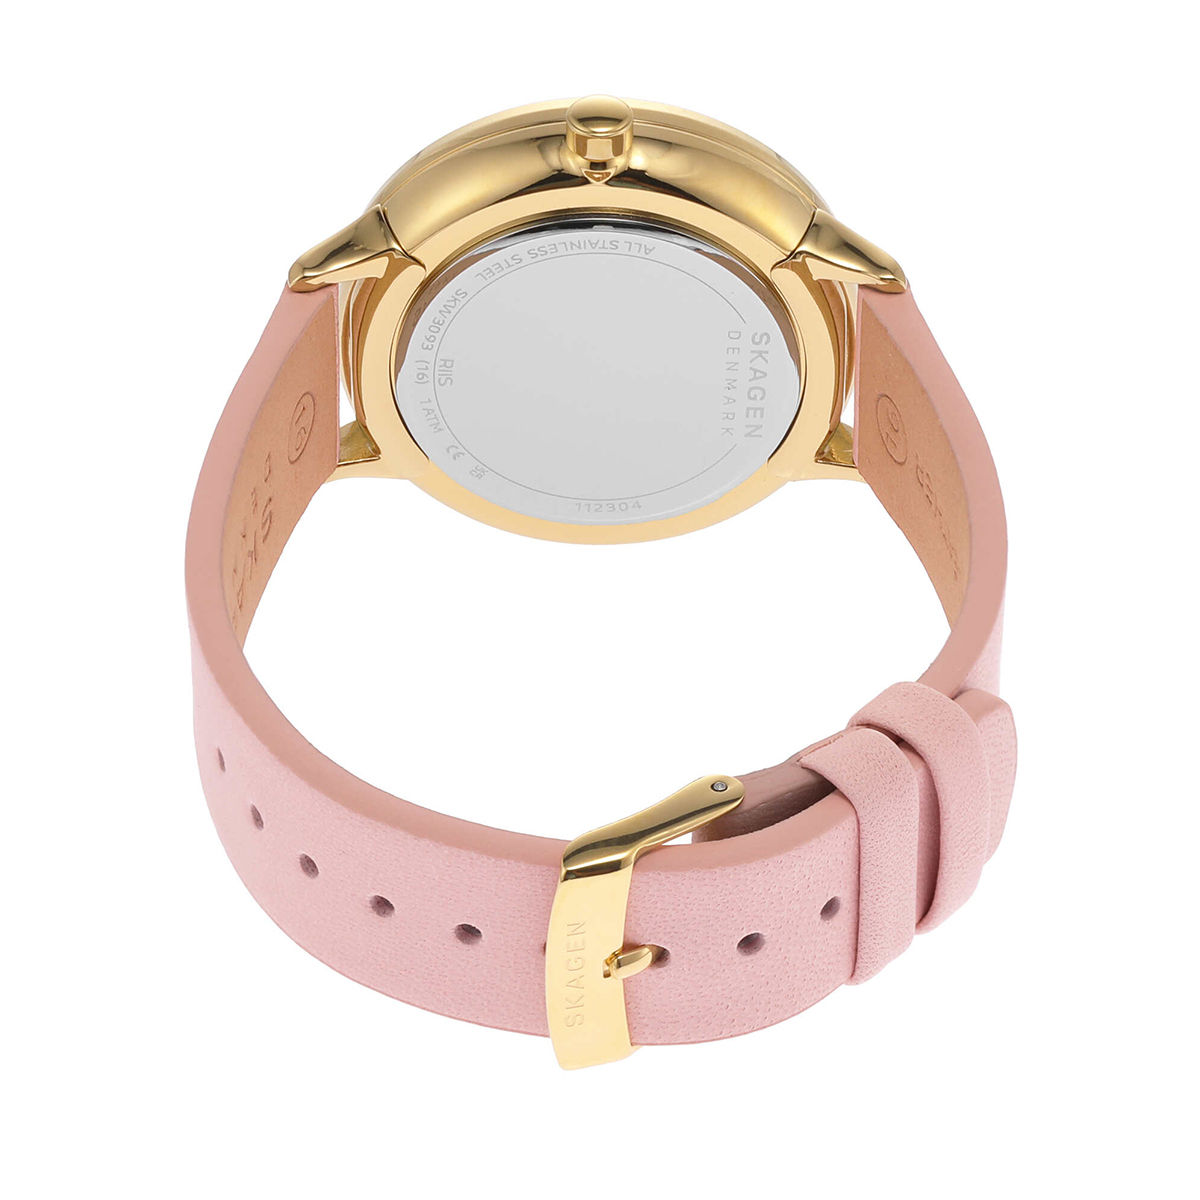 Skagen RIIS Pink Watch SKW3093 (M): Buy Skagen RIIS Pink Watch